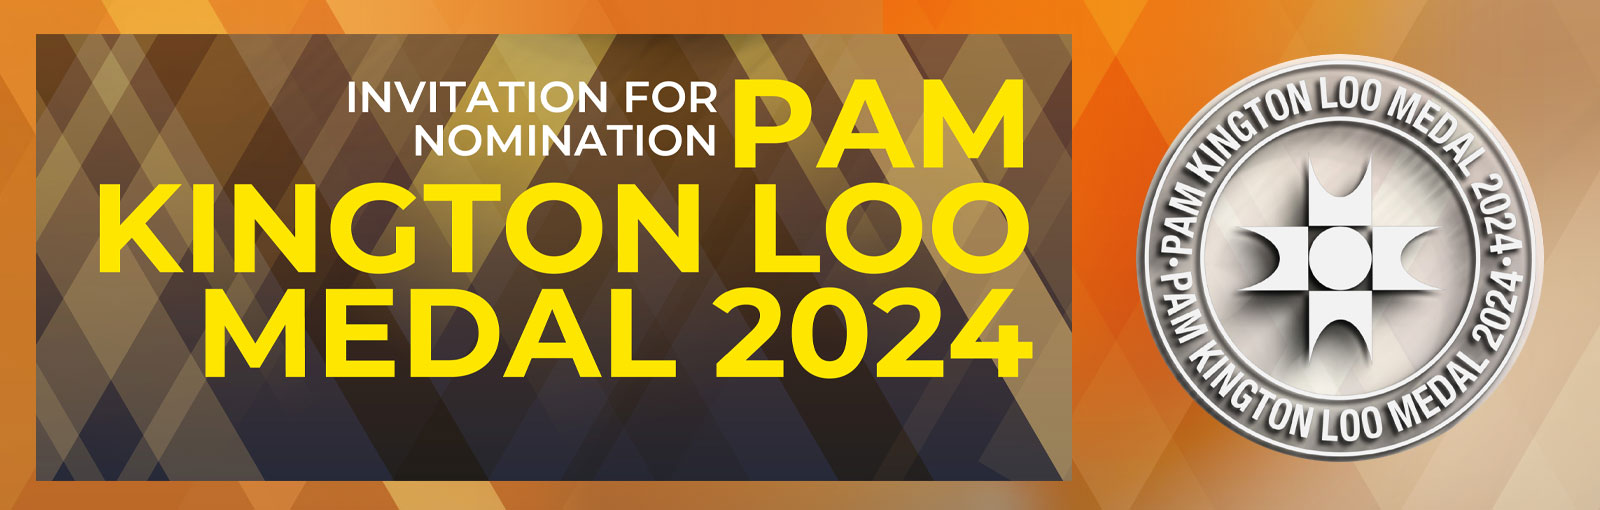 PAM Kington Loo Medal 2024 